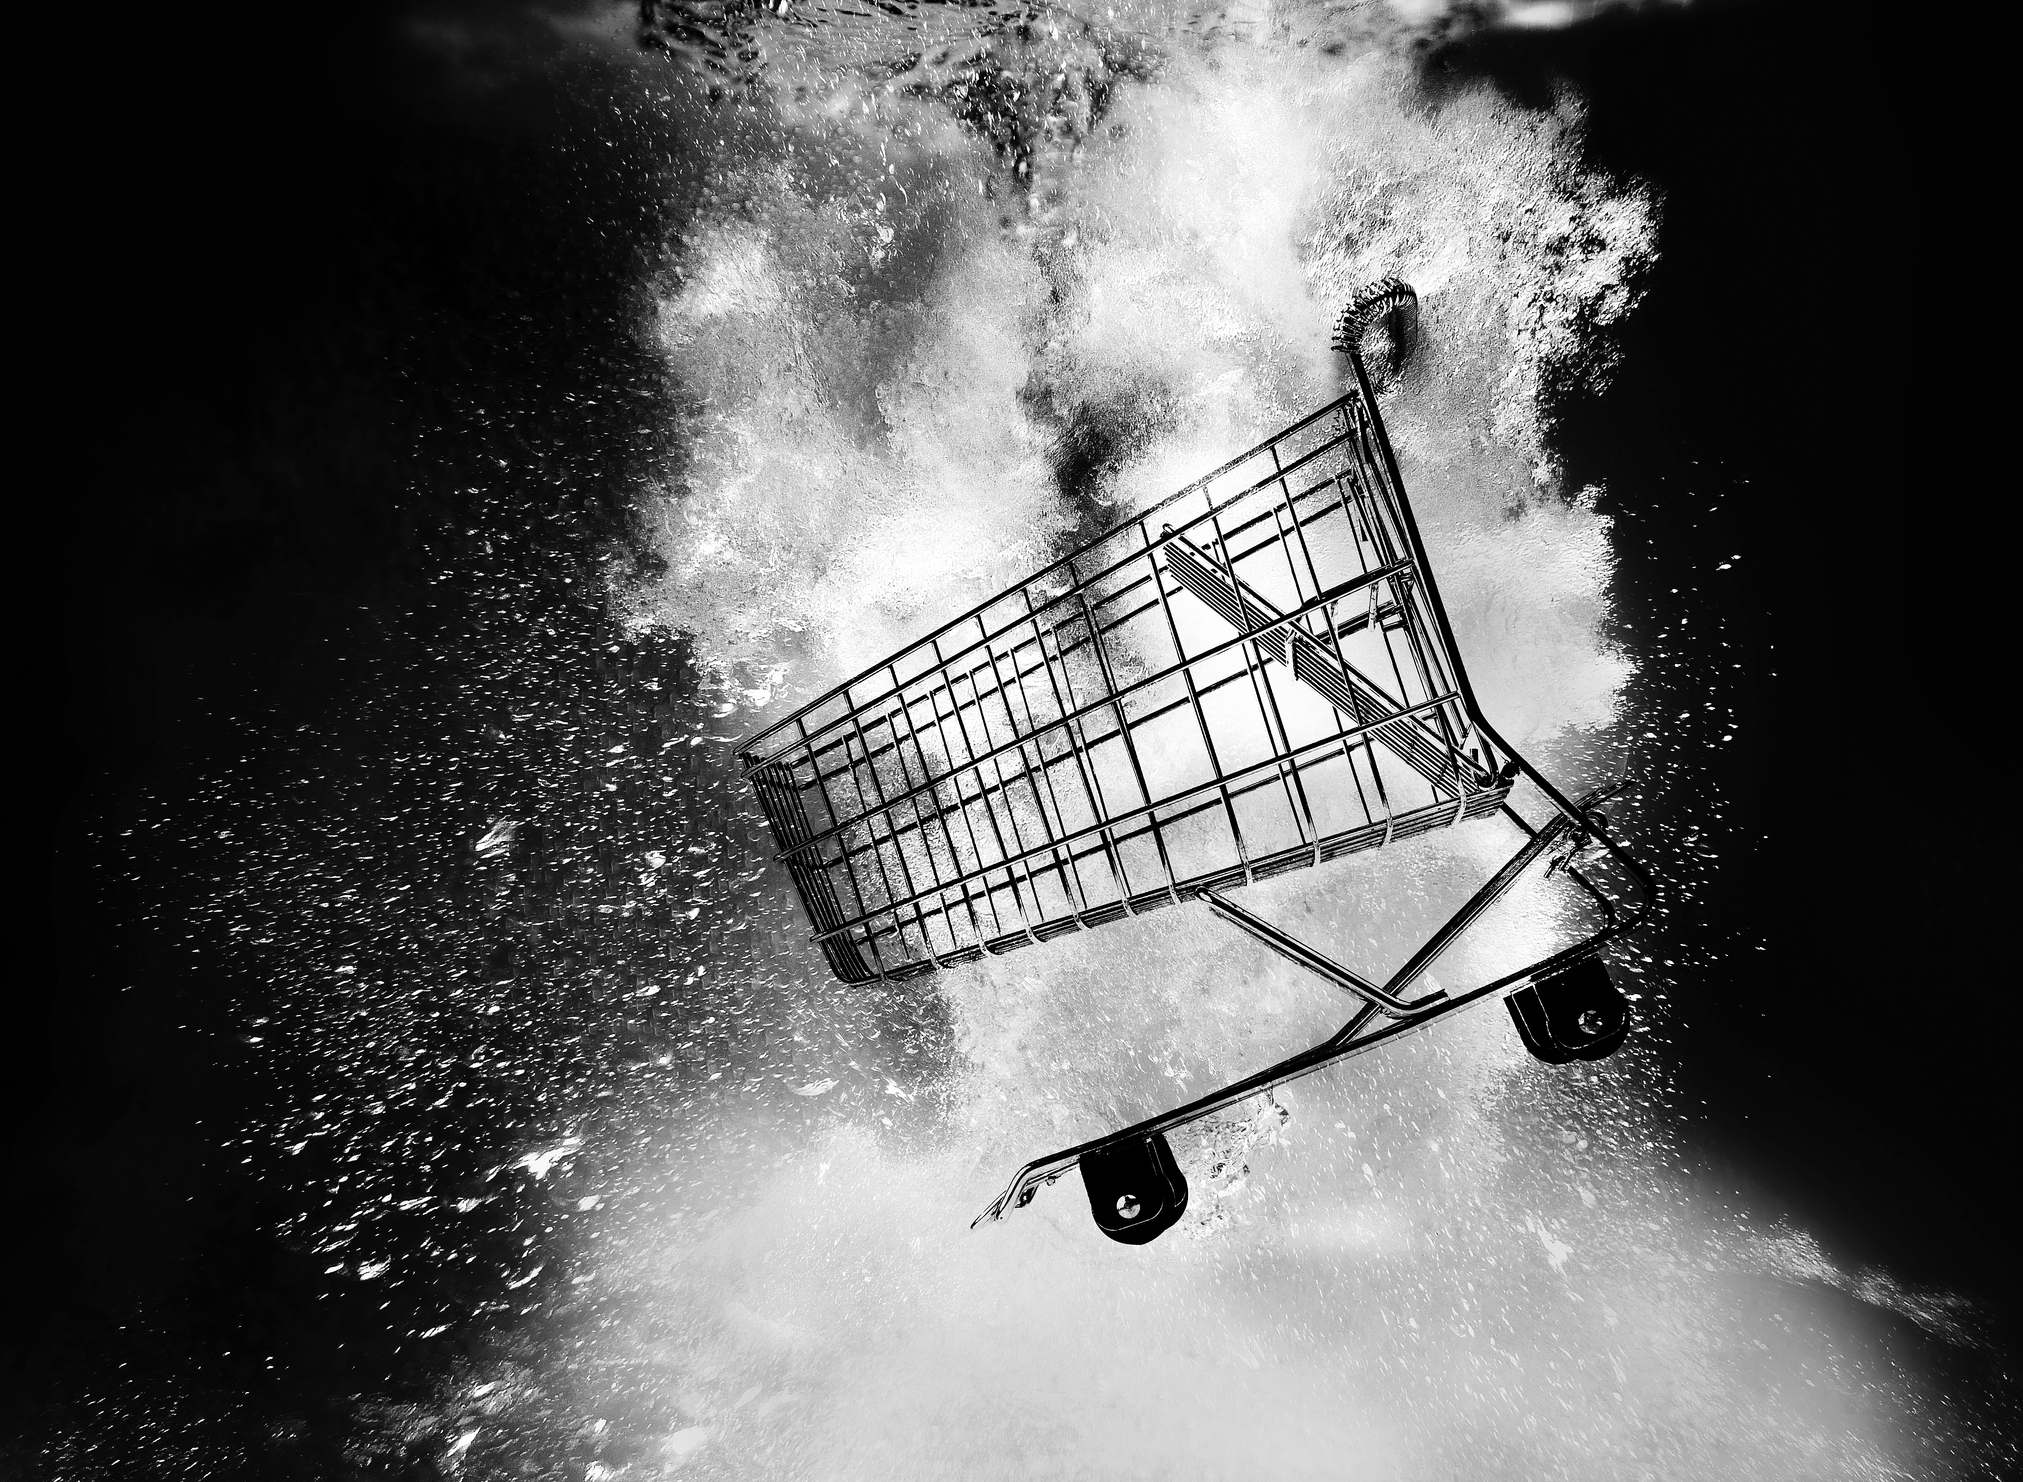 Shopping trolley underwater